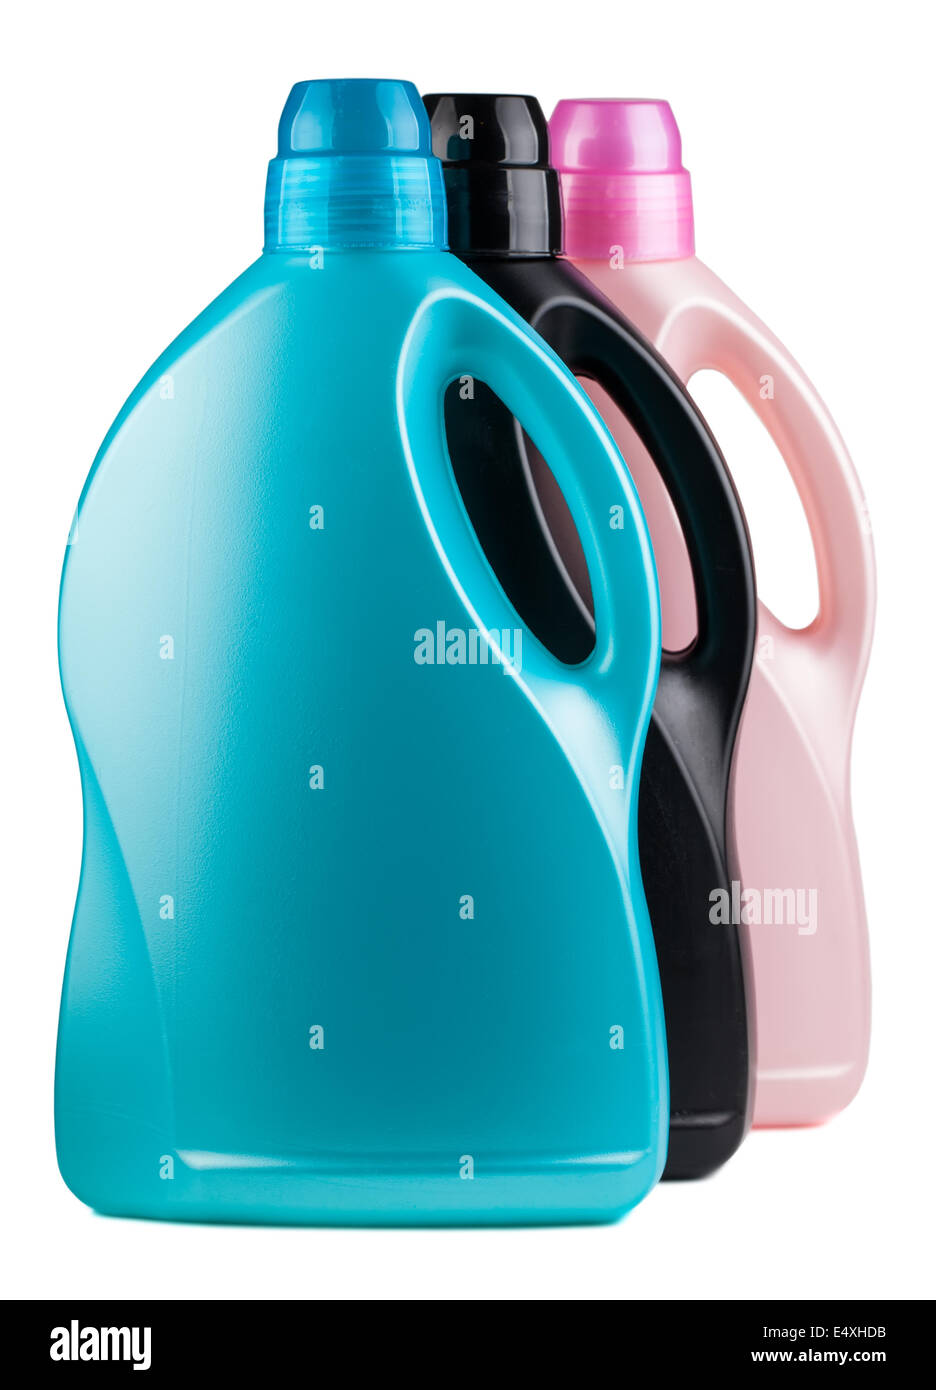 Three colorful plastic bottles Stock Photo